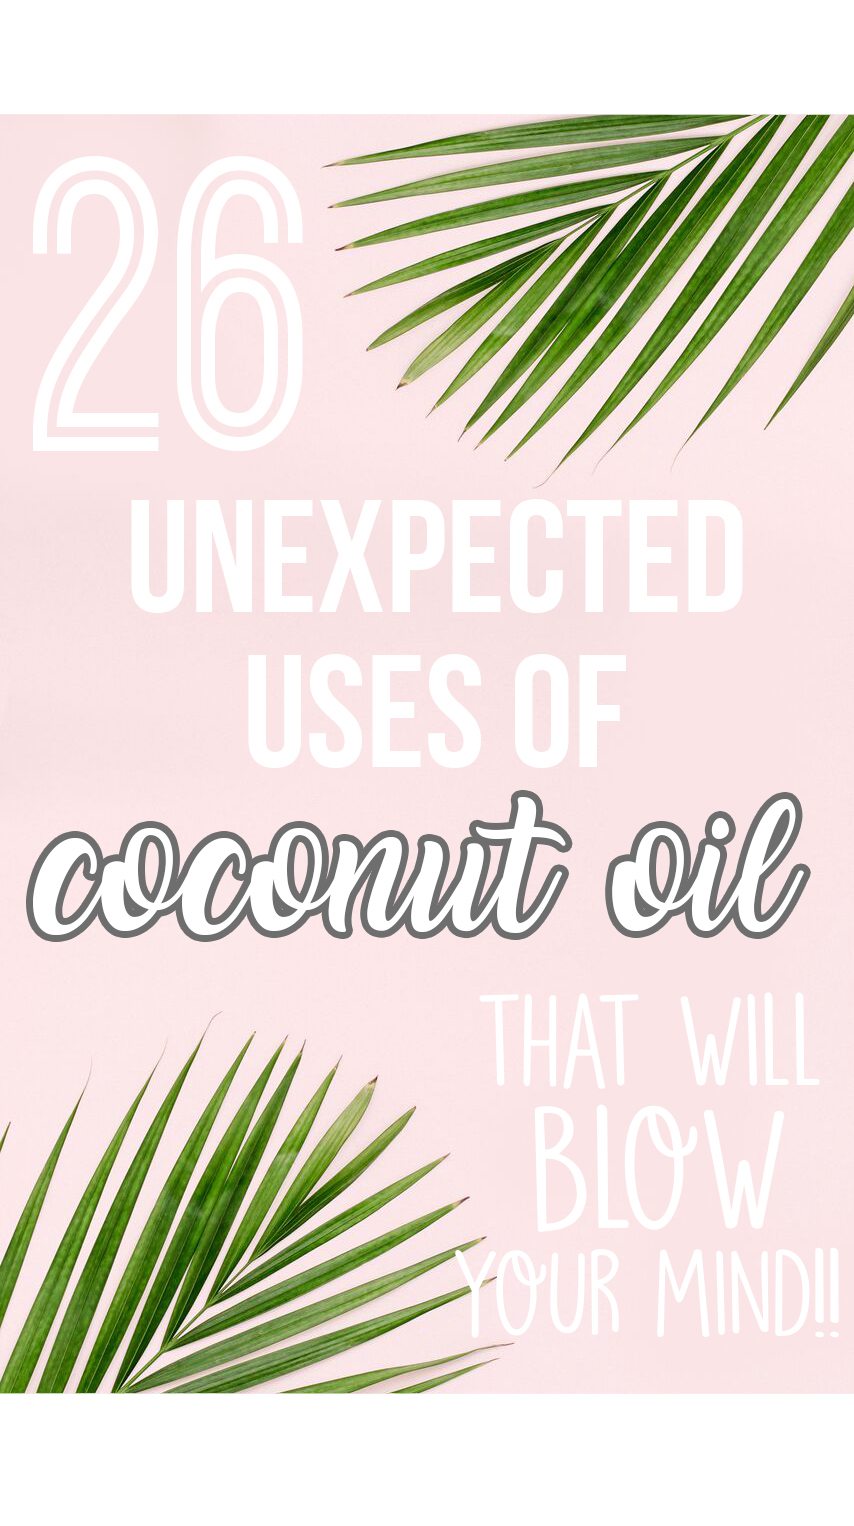 26 unexpected uses of coconut oil || health remedies, life hacks, alternatives, health benefits || Nikki's Plate www.nikkisplate.com